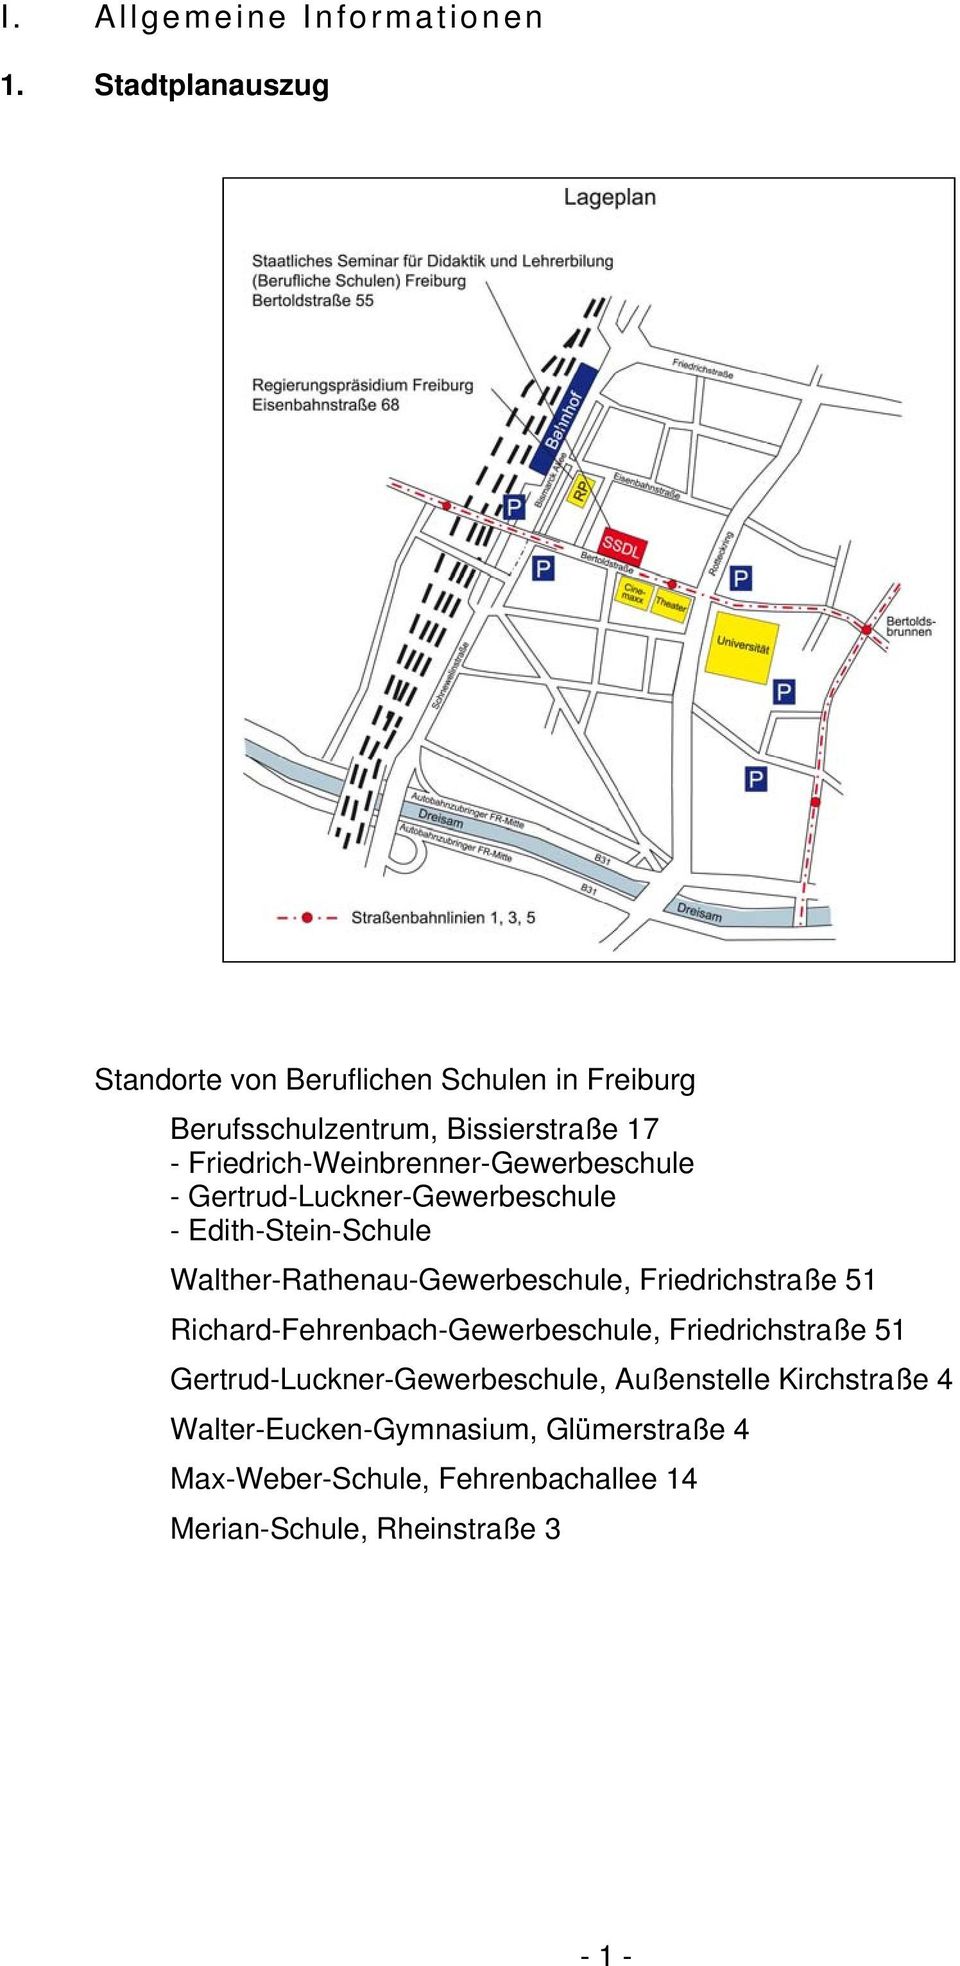 Friedrich-Weinbrenner-Gewerbeschule - Gertrud-Luckner-Gewerbeschule - Edith-Stein-Schule Walther-Rathenau-Gewerbeschule,